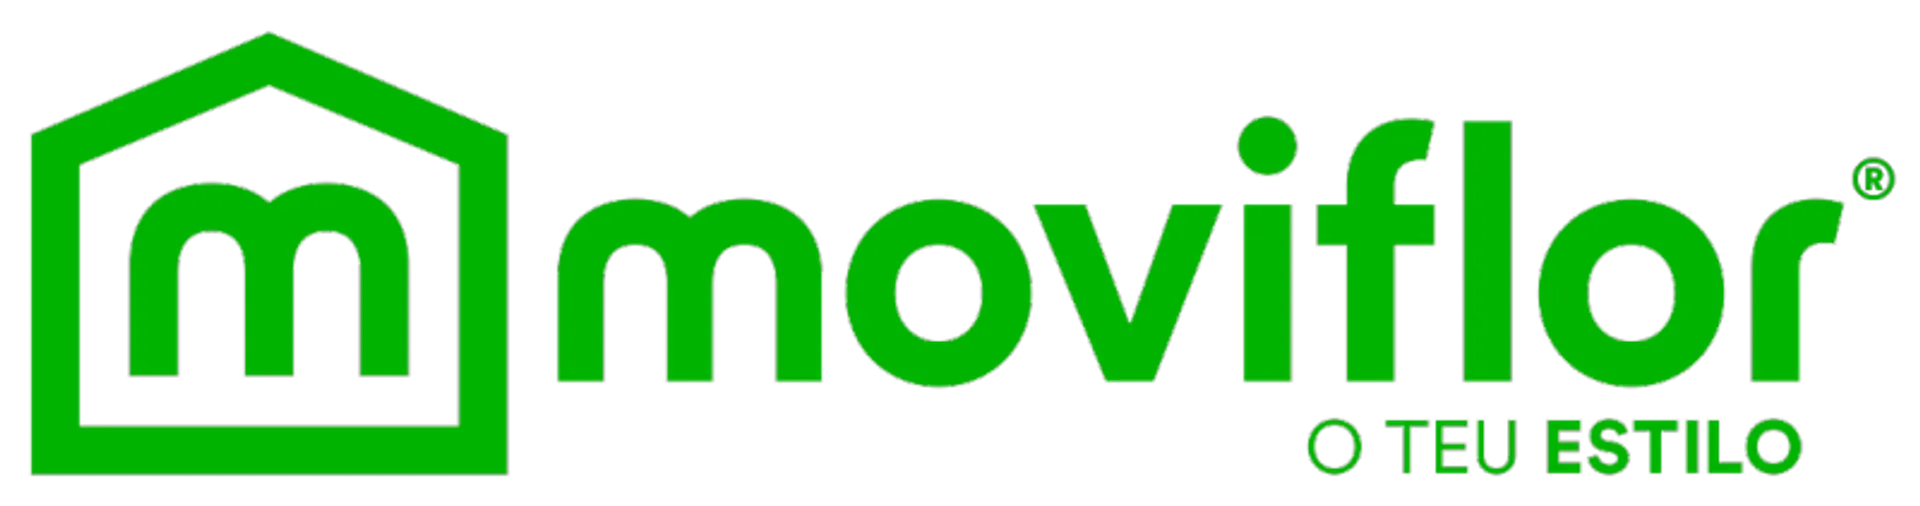 Moviflor logo